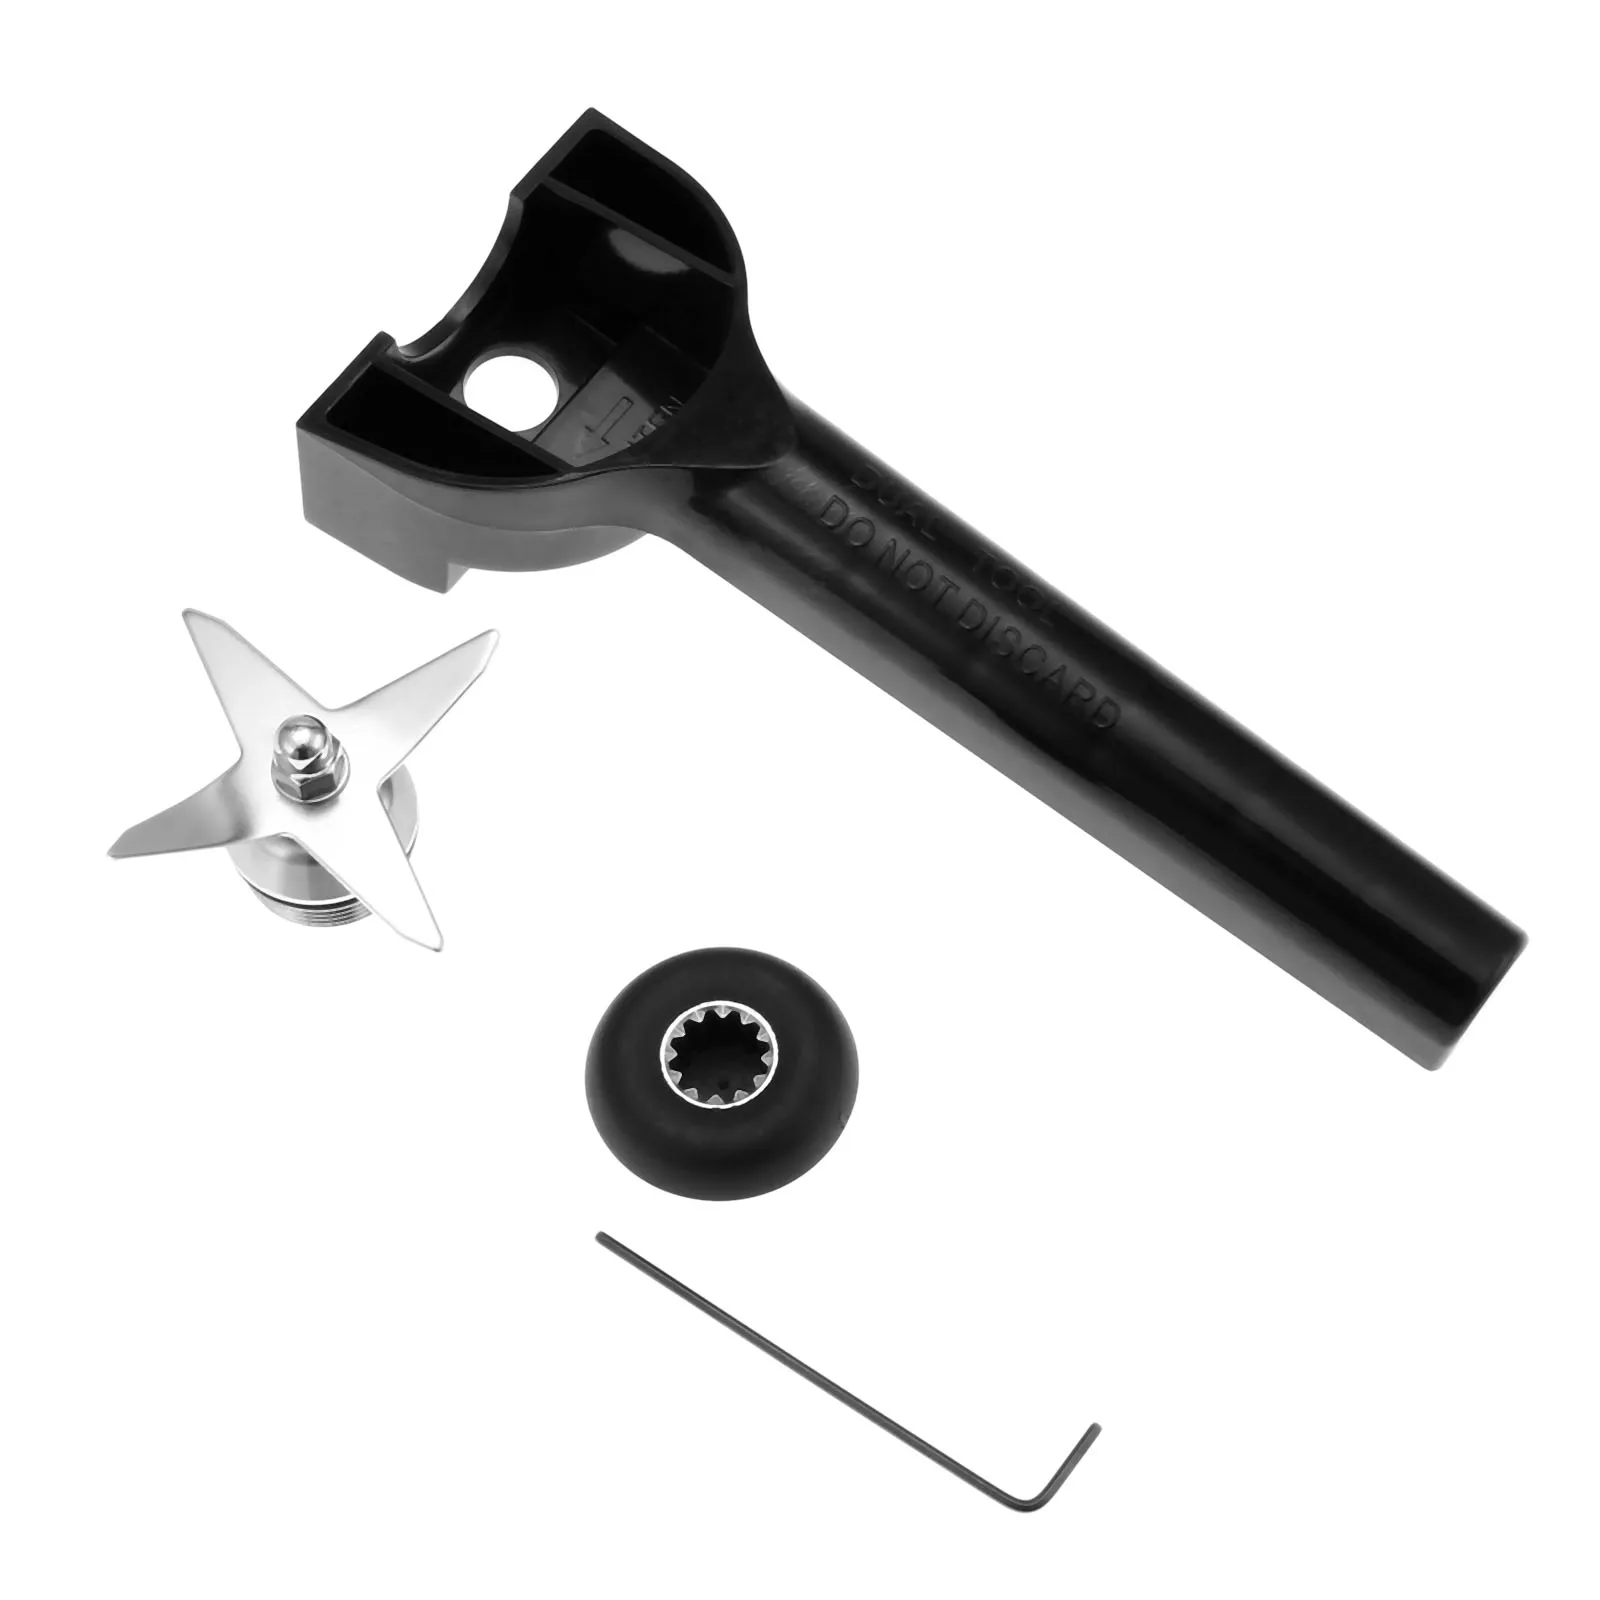 

Repair Kit Blade Removal Tool Drive Socket Fits for Vitamix 5200 64 48 32 oz